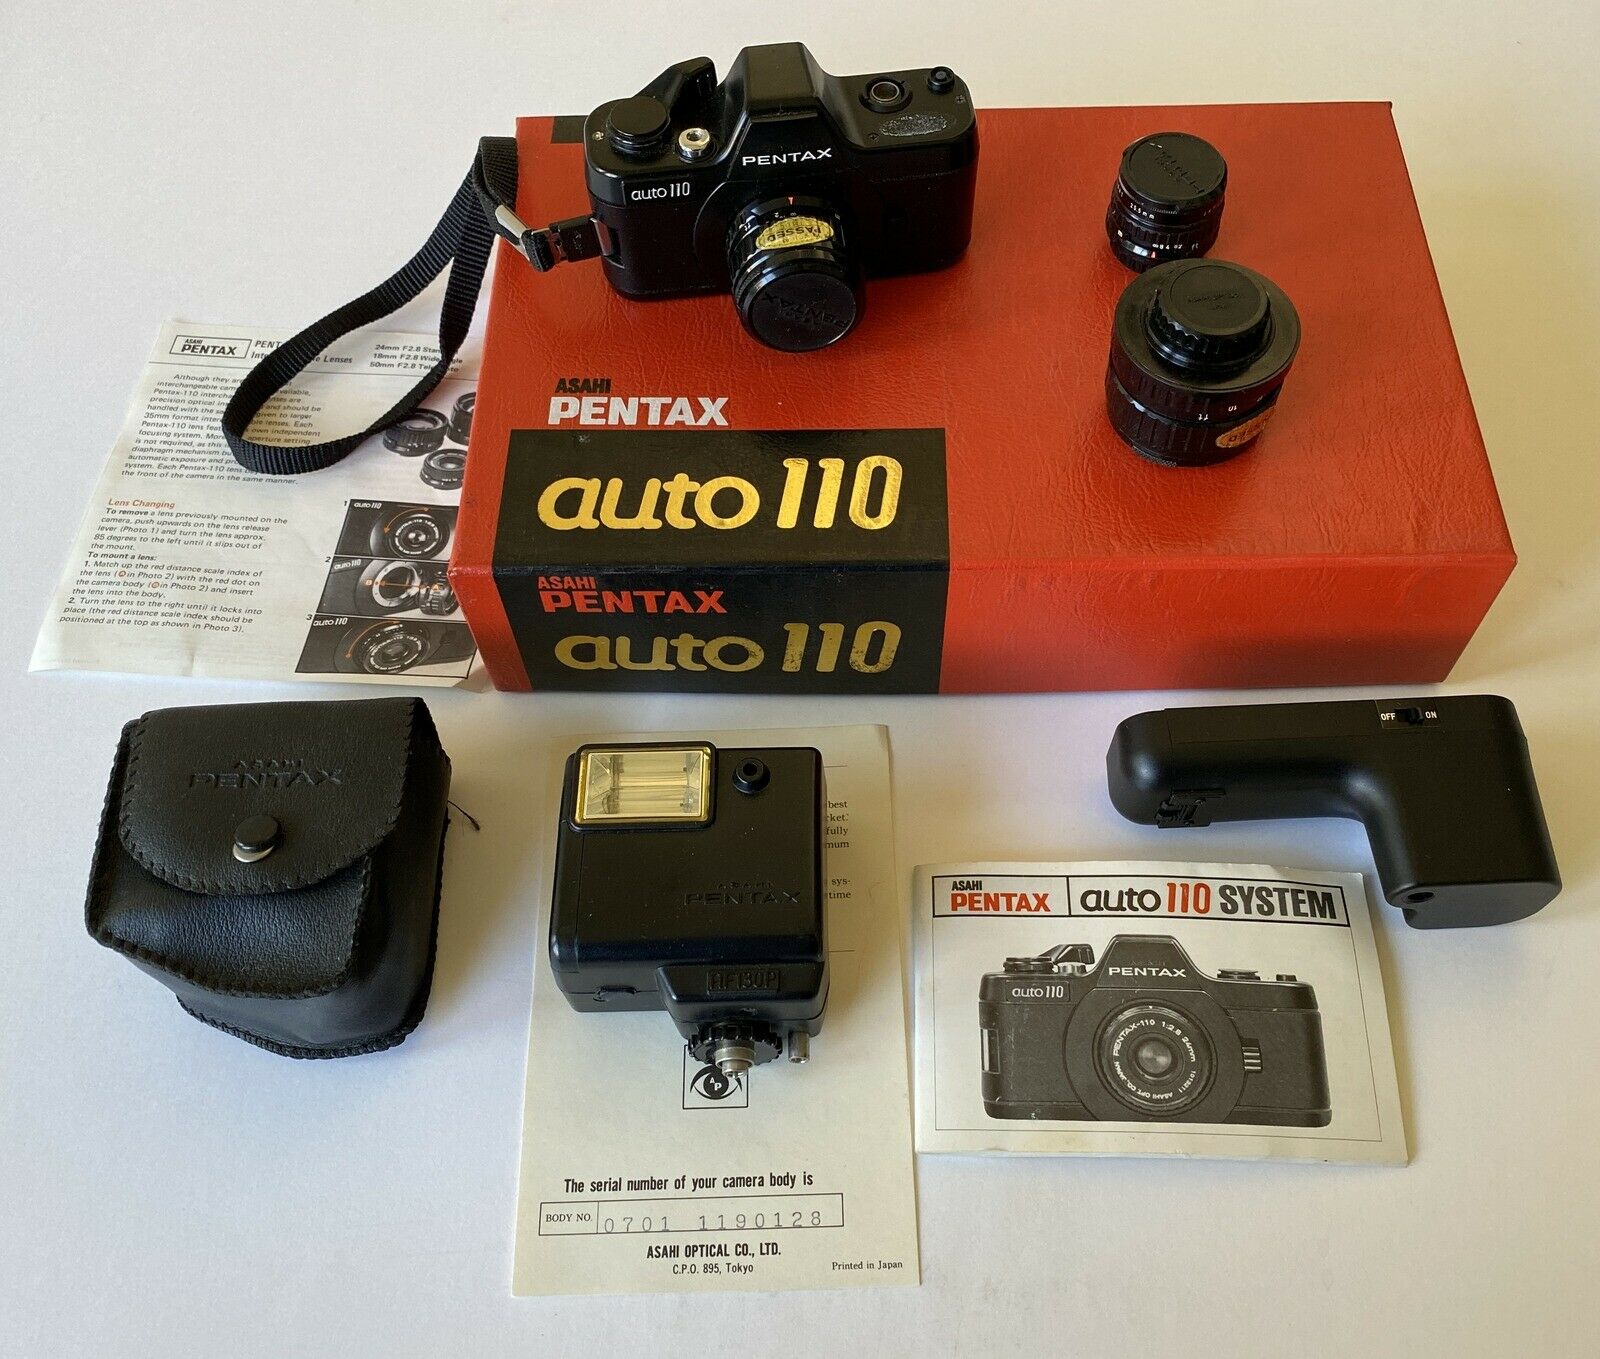 Pentax Auto 110 System Slr Camera Box Set 3 Lenses, Flash, Autowind, Manuals Etc